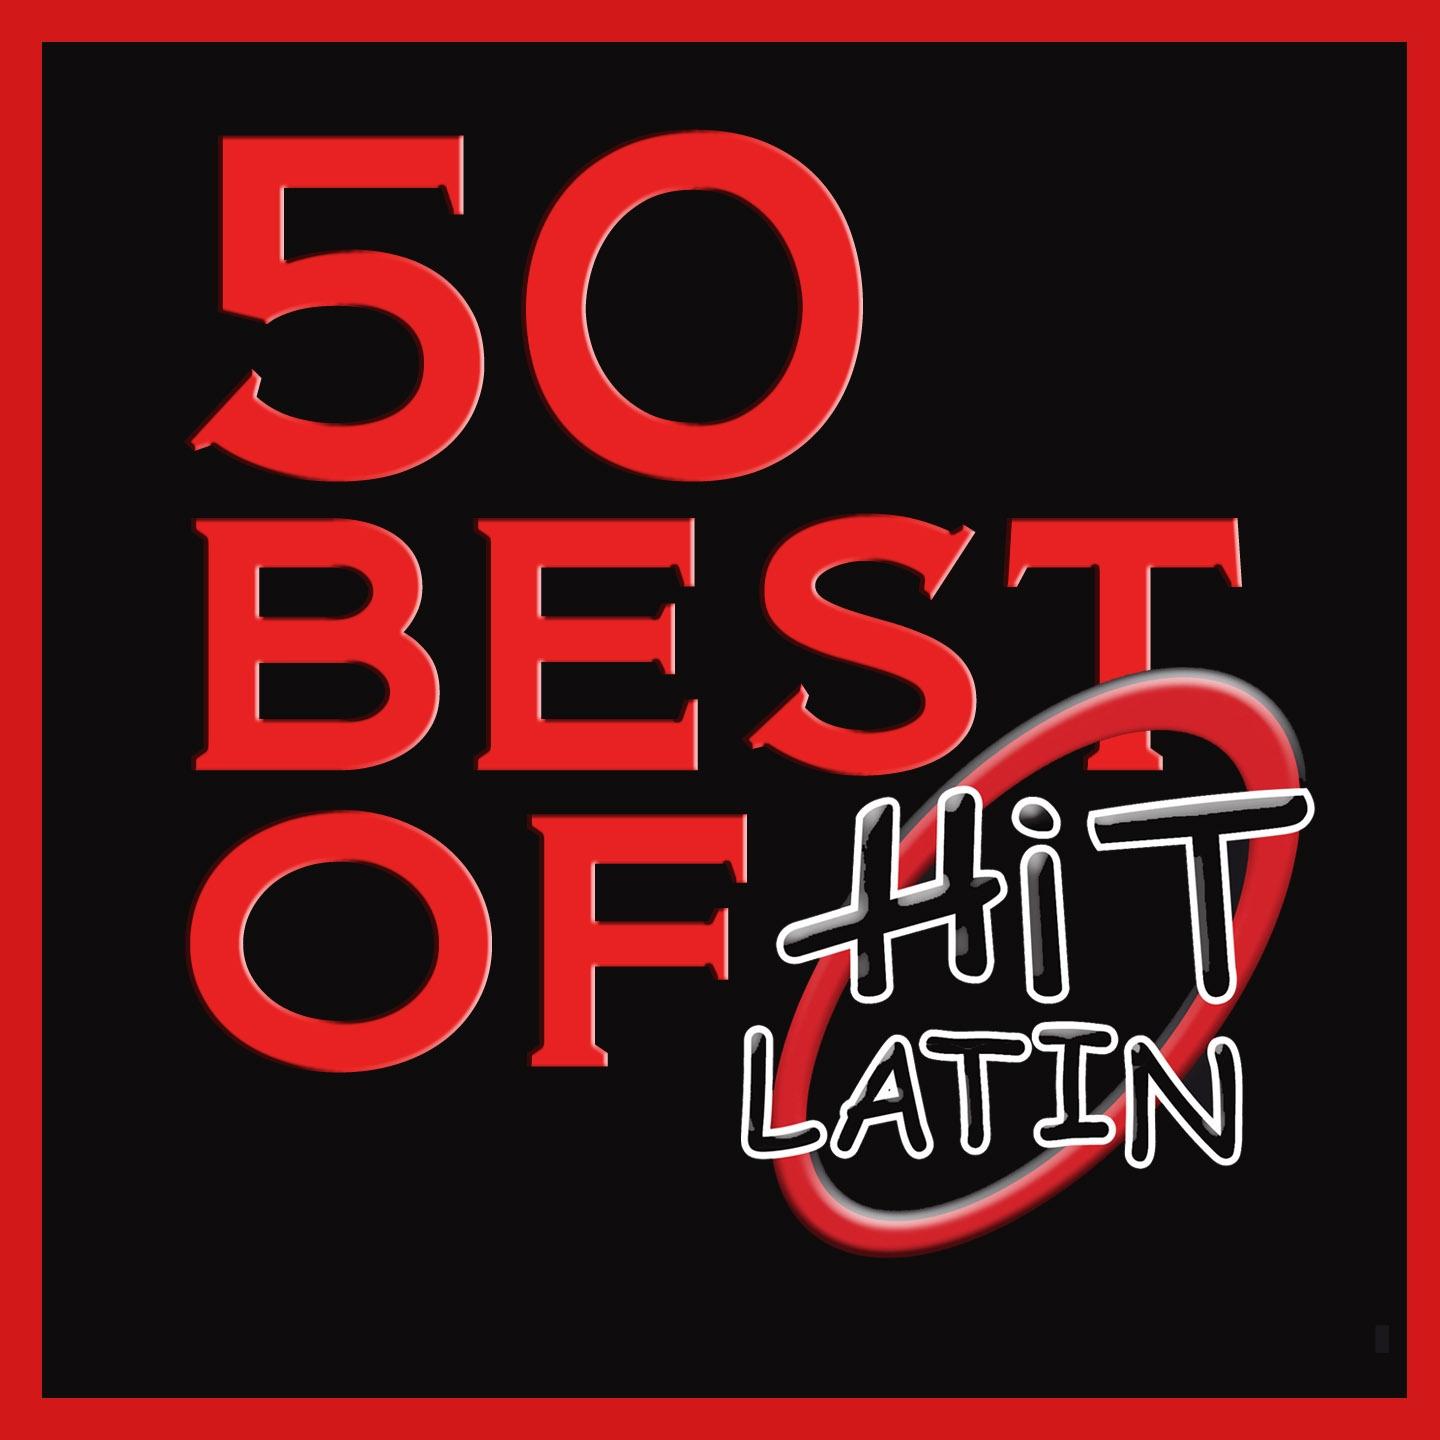 50 Best of Hit Latin